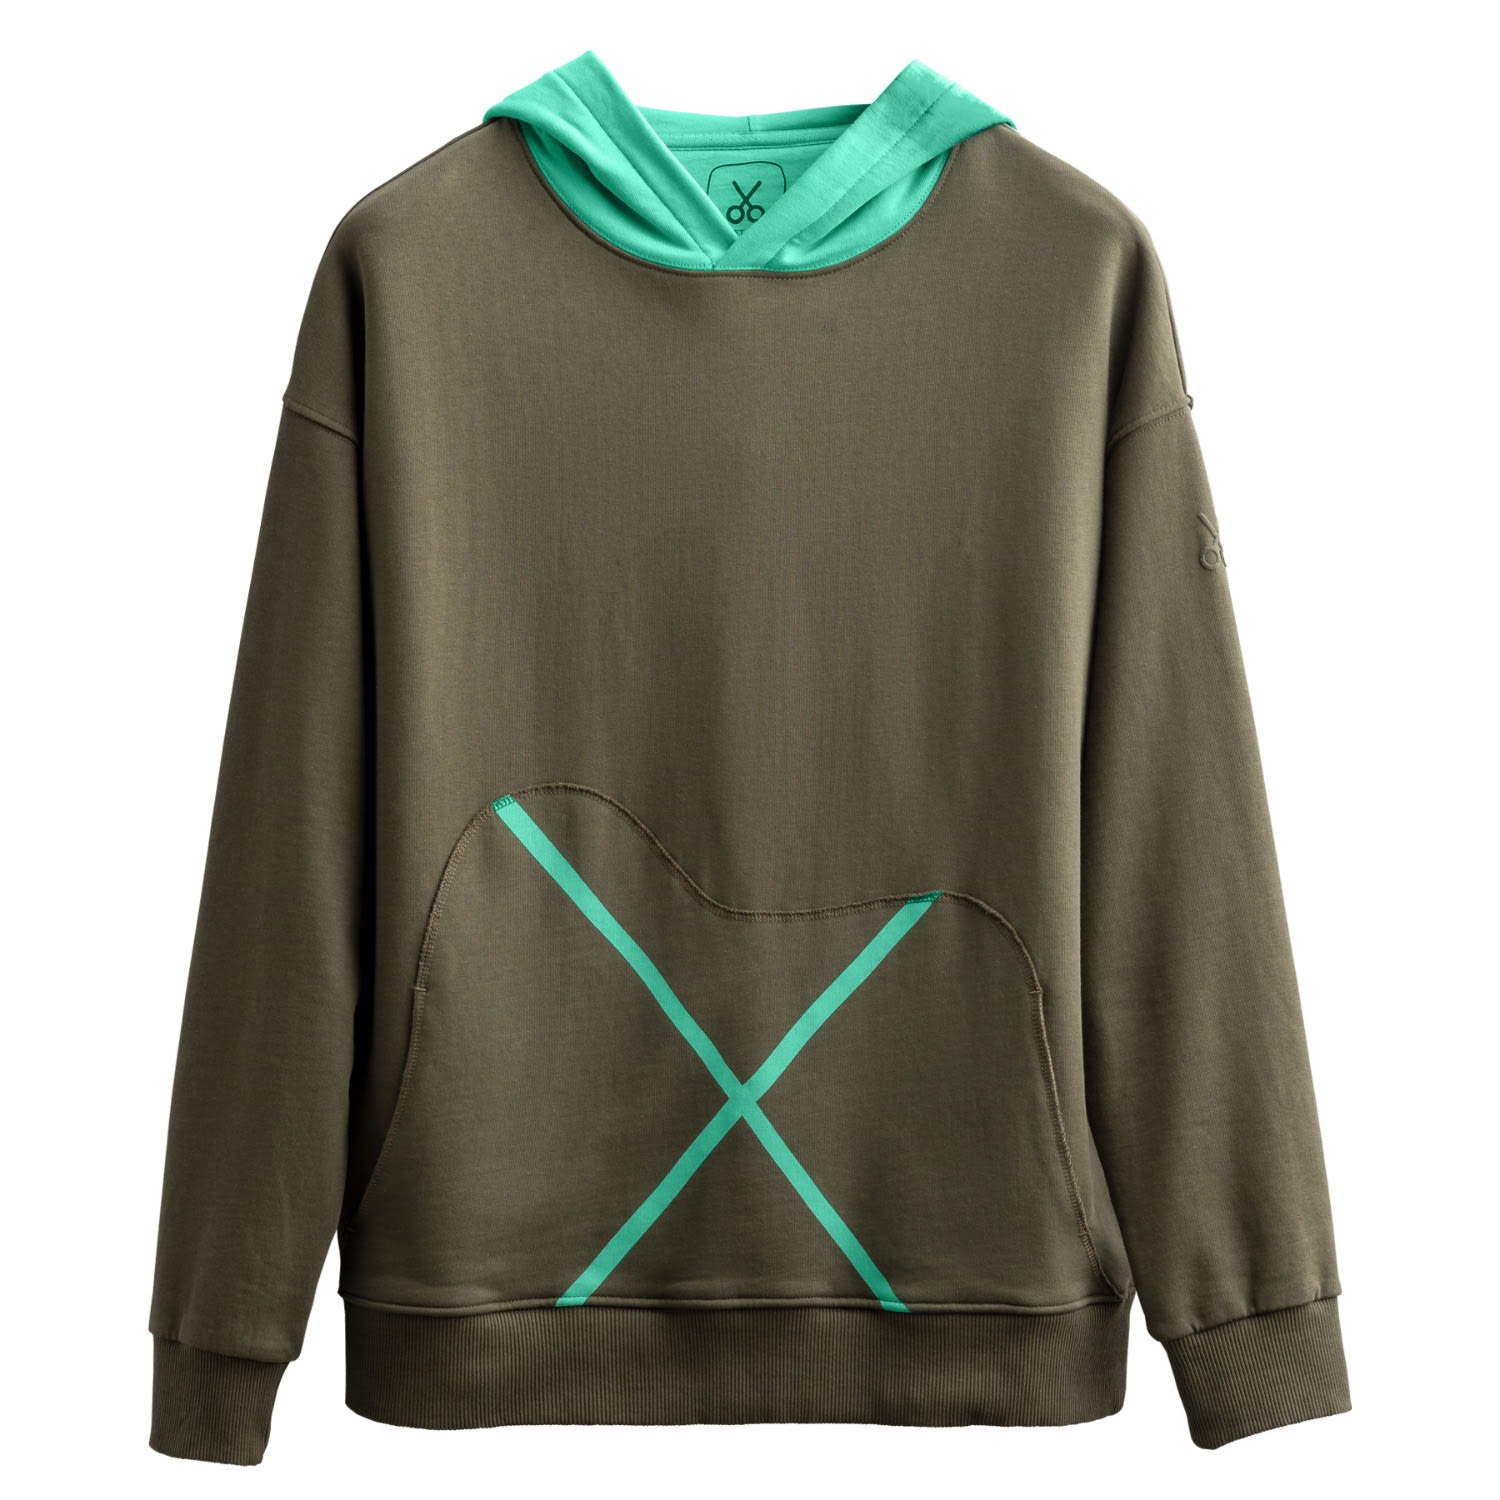 Men's Green Unisex Design Hoodie Sweatshirt - Xpocket - Jungle Extra Small KAFT